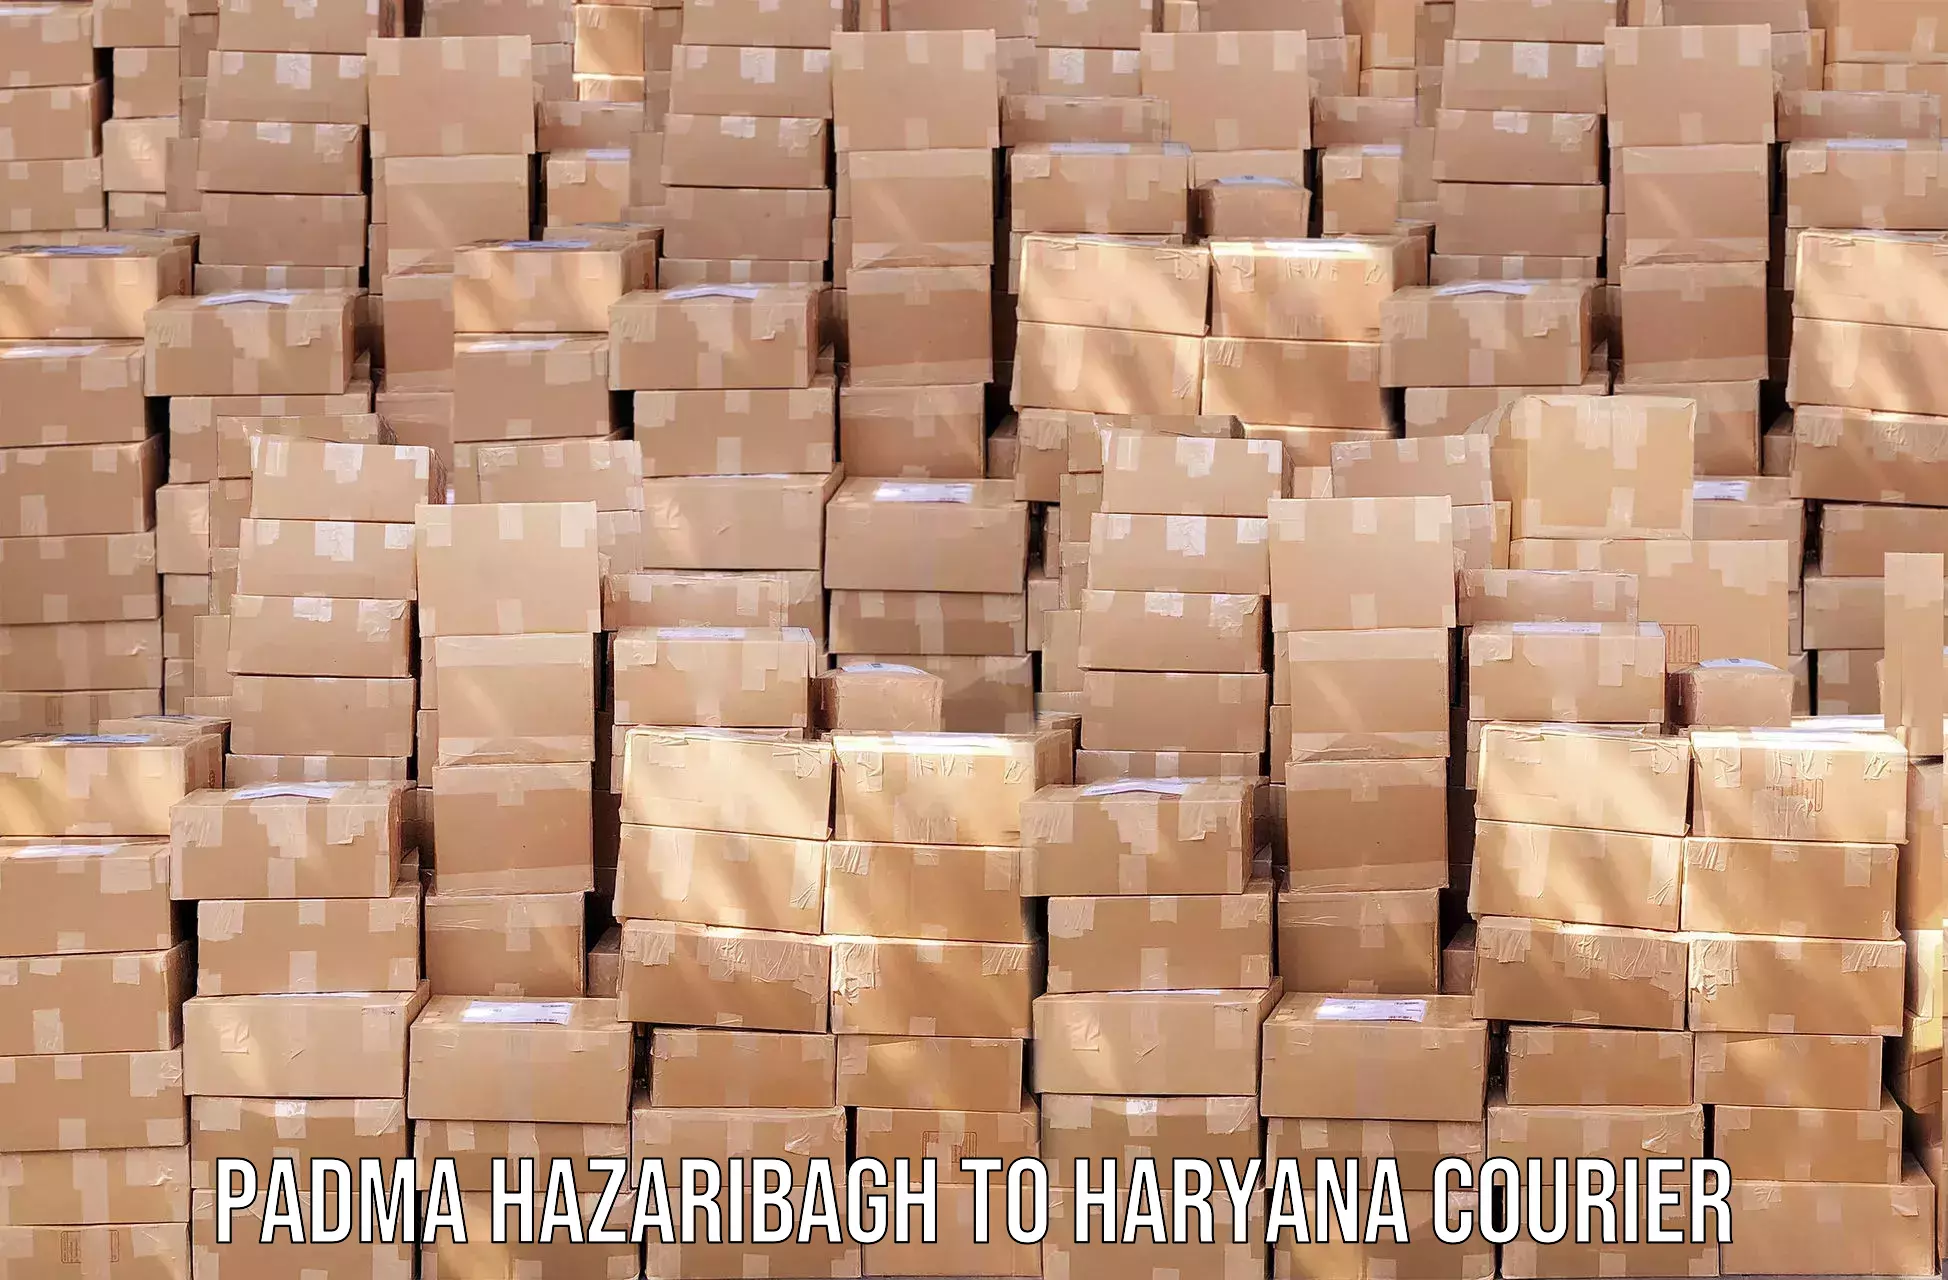 Professional courier handling Padma Hazaribagh to Charkhari